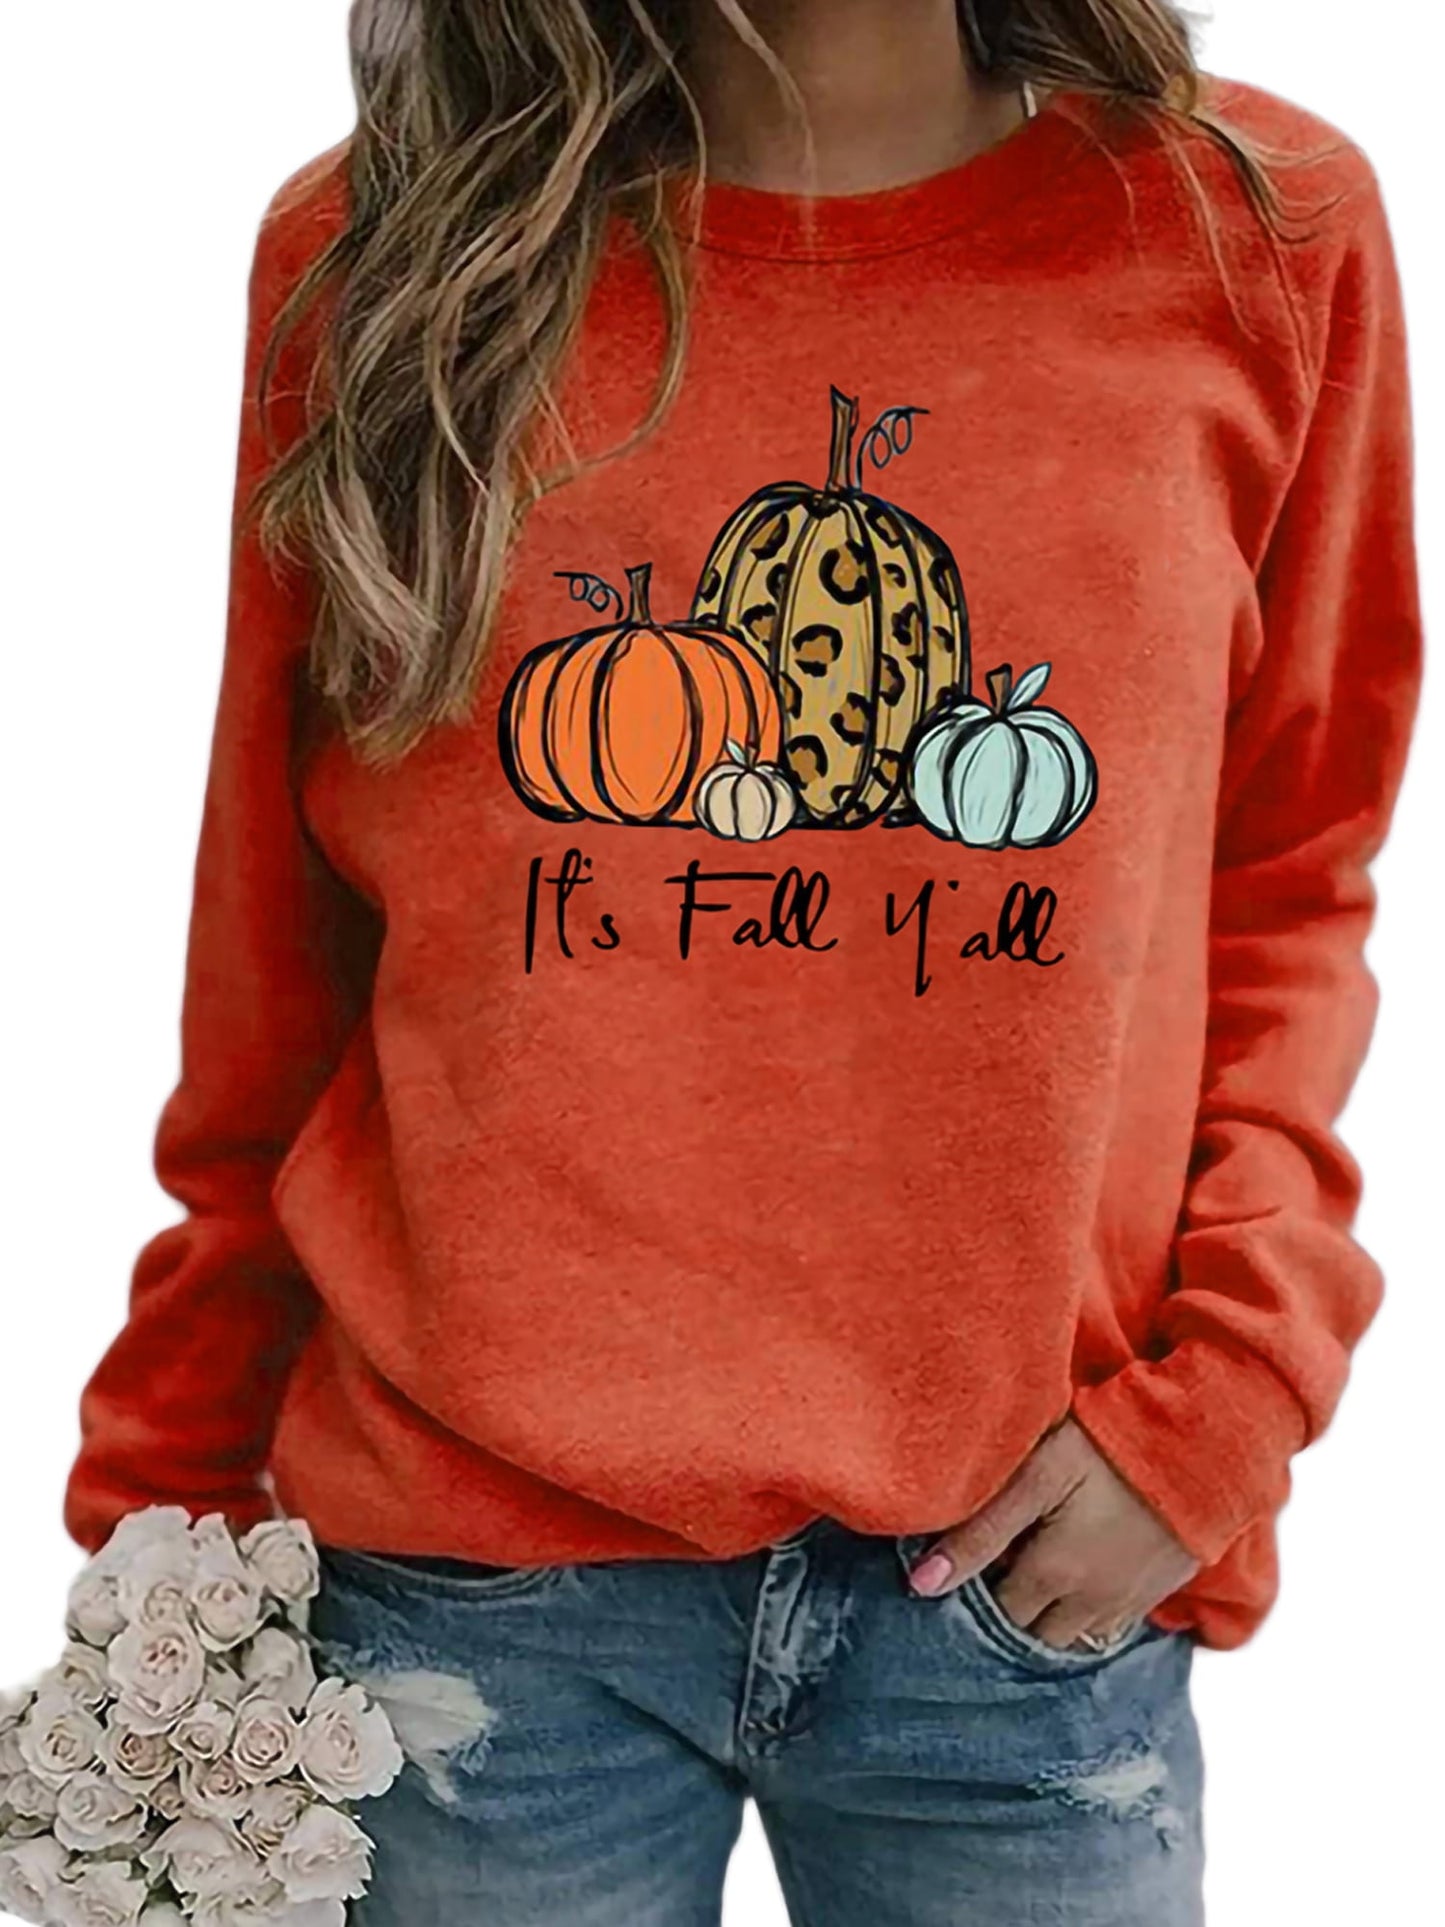 It's Fall Ya'll Lightweight Pullover Shirt